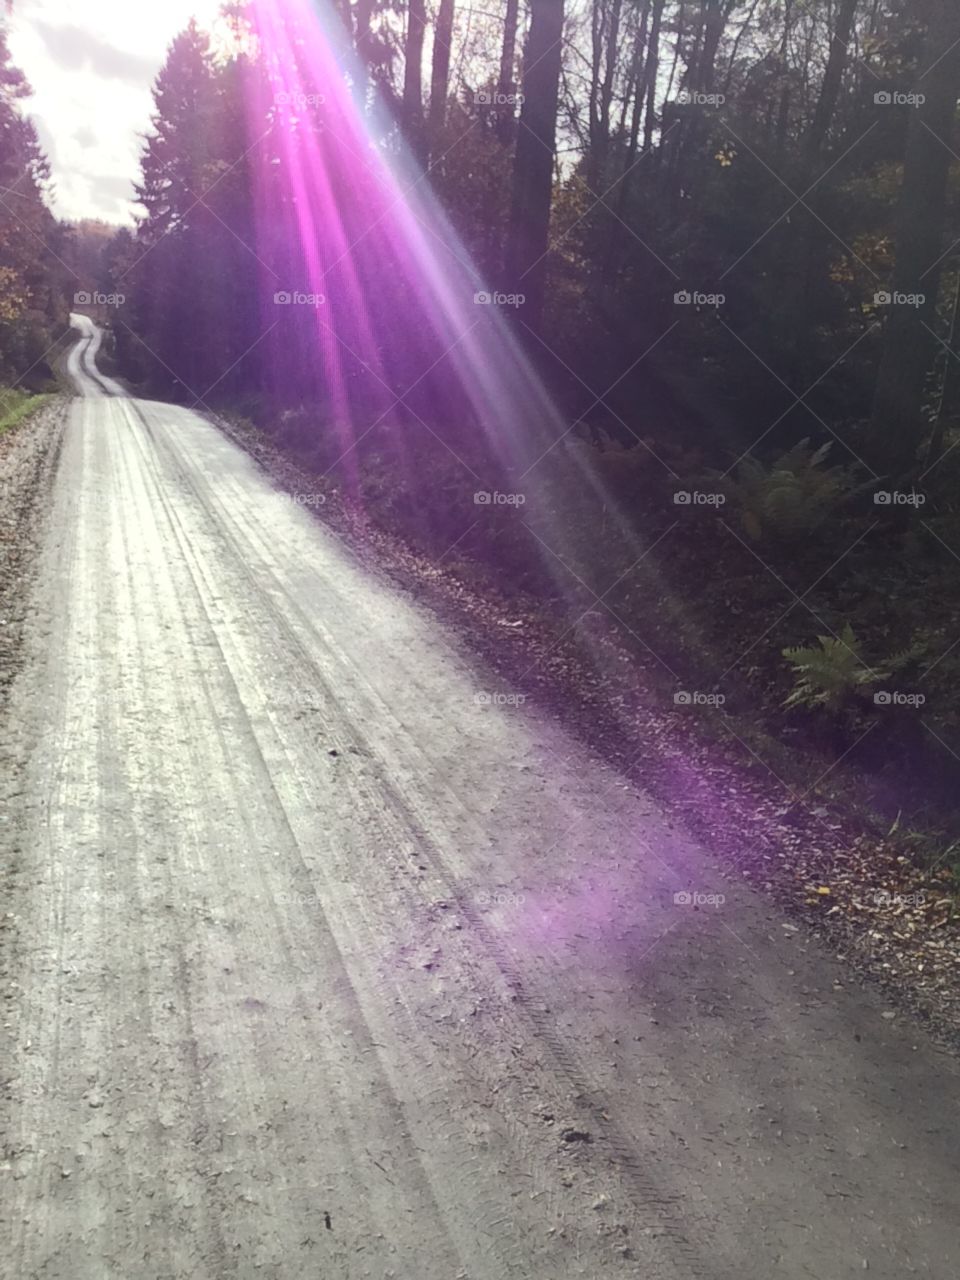 Purpel sun beam. Shining on contery dirt road